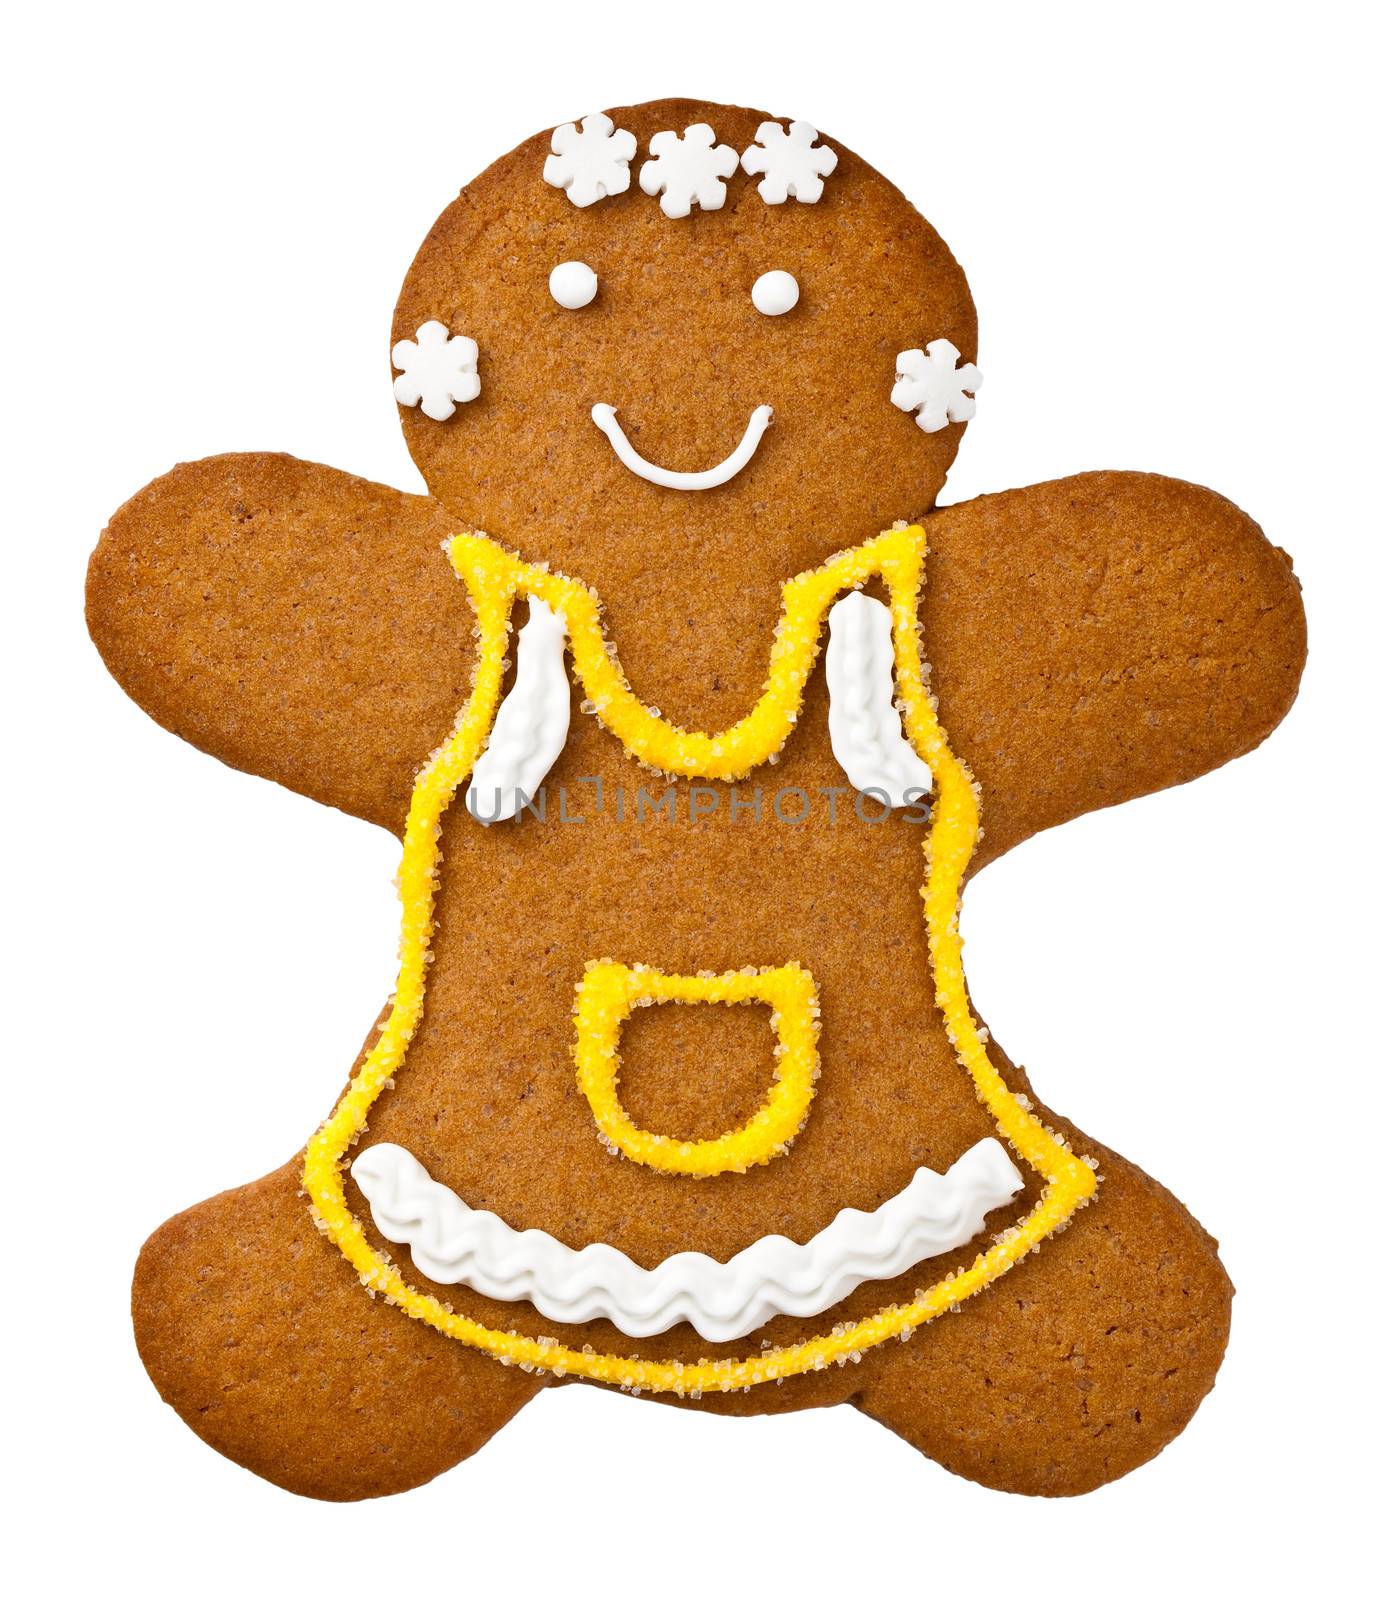 Gingerbread Woman by bozena_fulawka